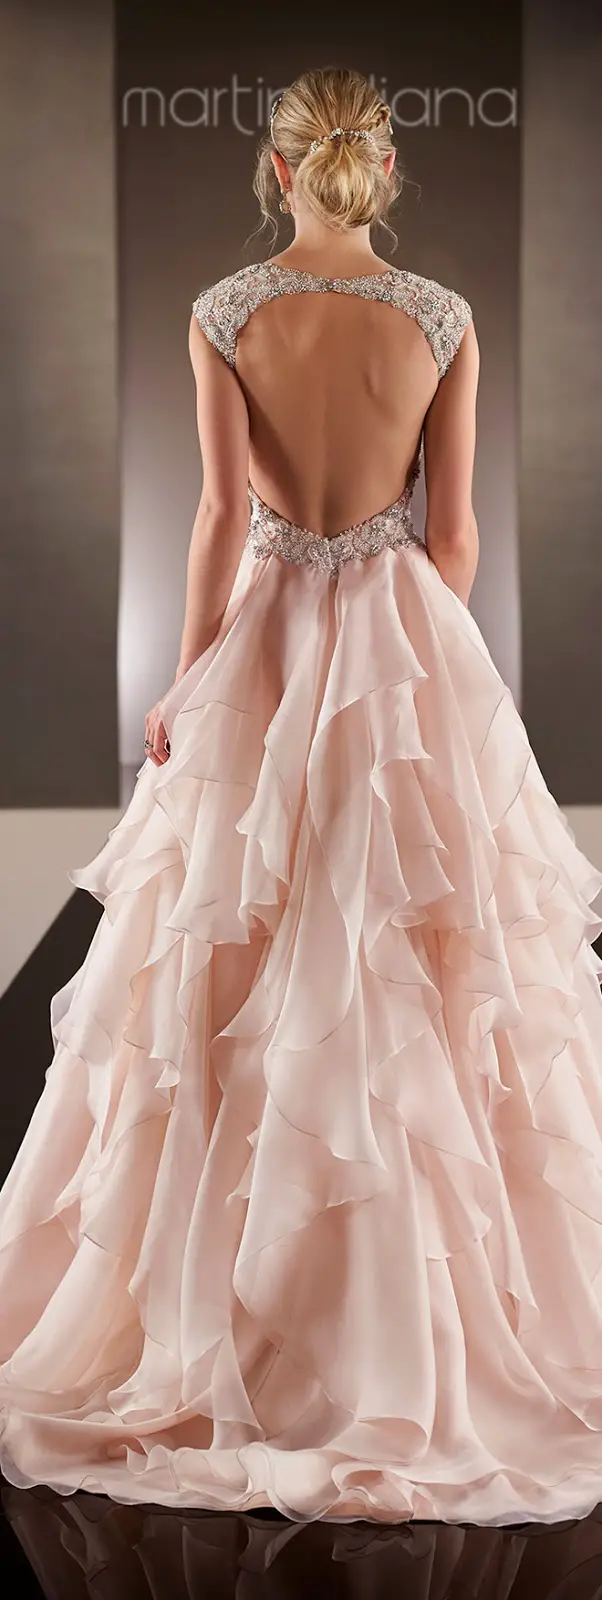 Best Wedding Dresses of 2014 - Martina Liana